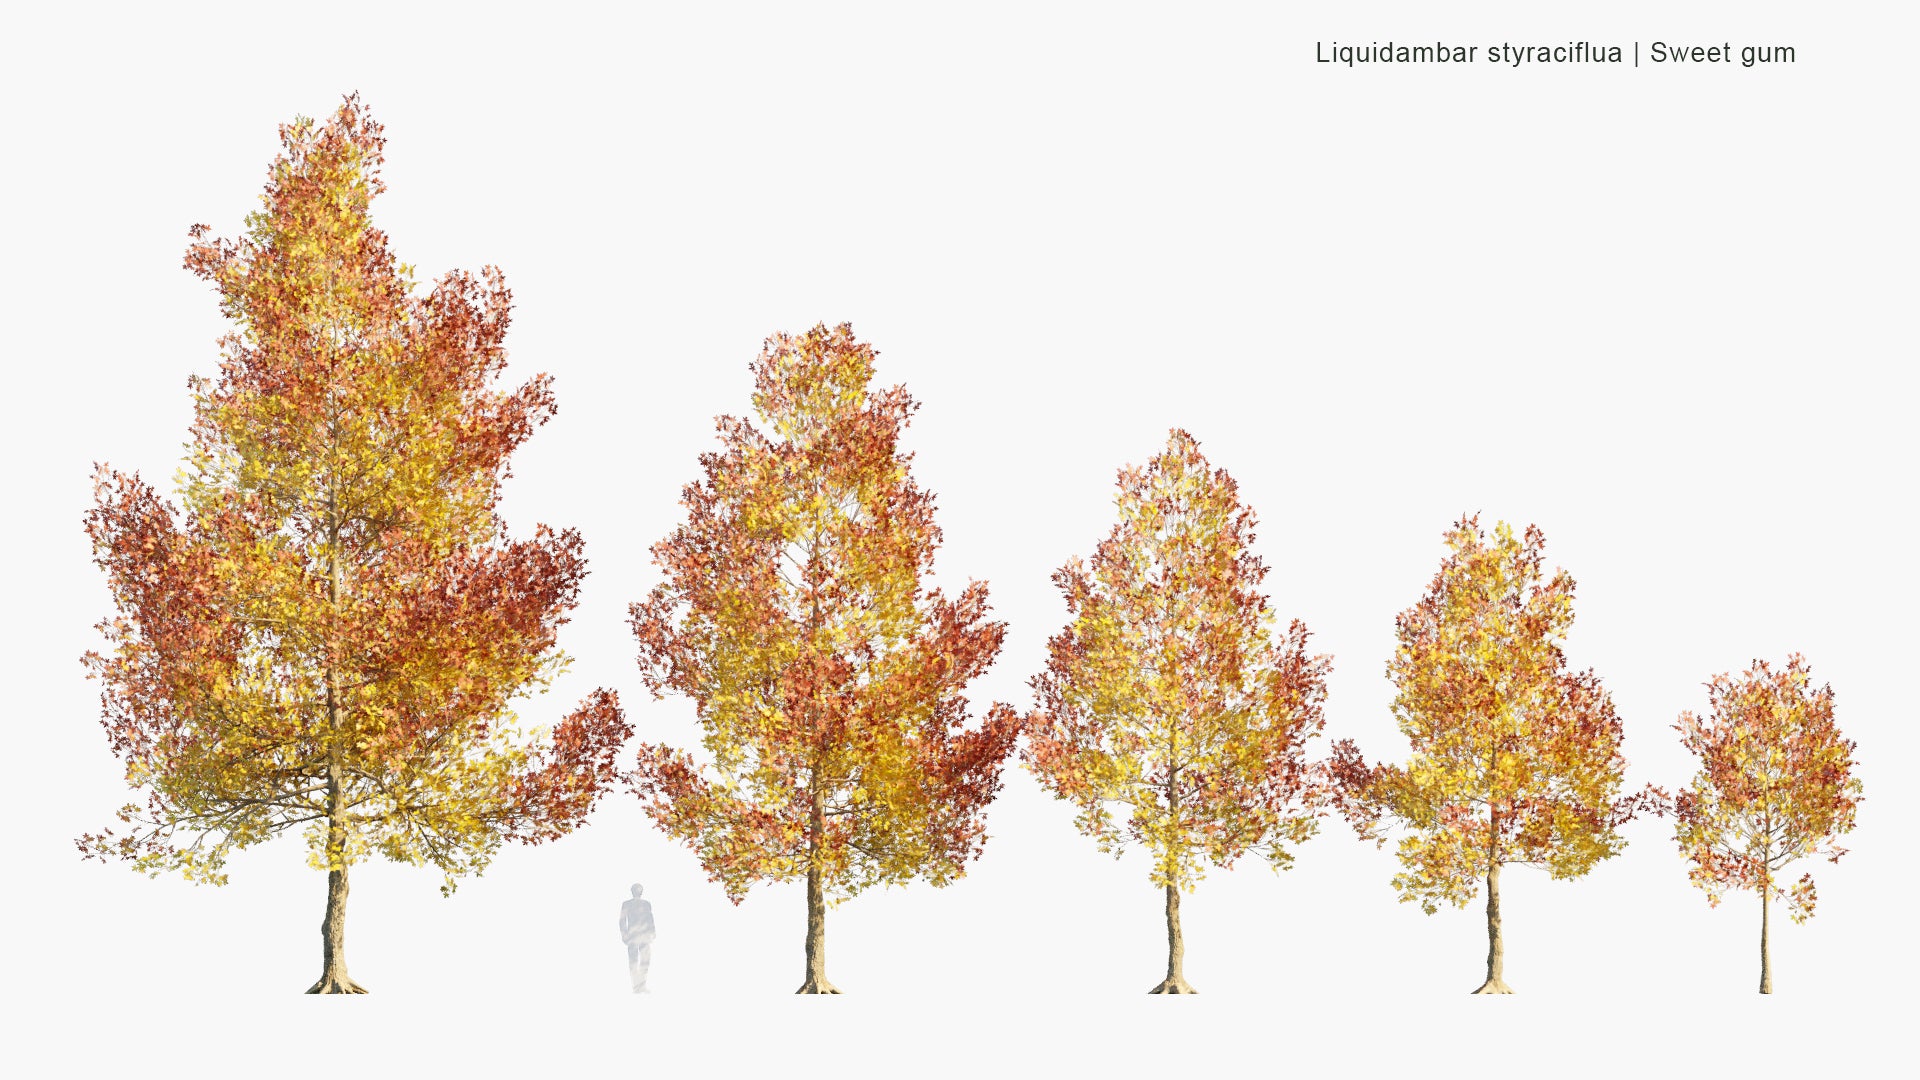 Low Poly Liquidambar Styraciflua - American Sweetgum, Hazel Pine, Bilsted (3D Model)